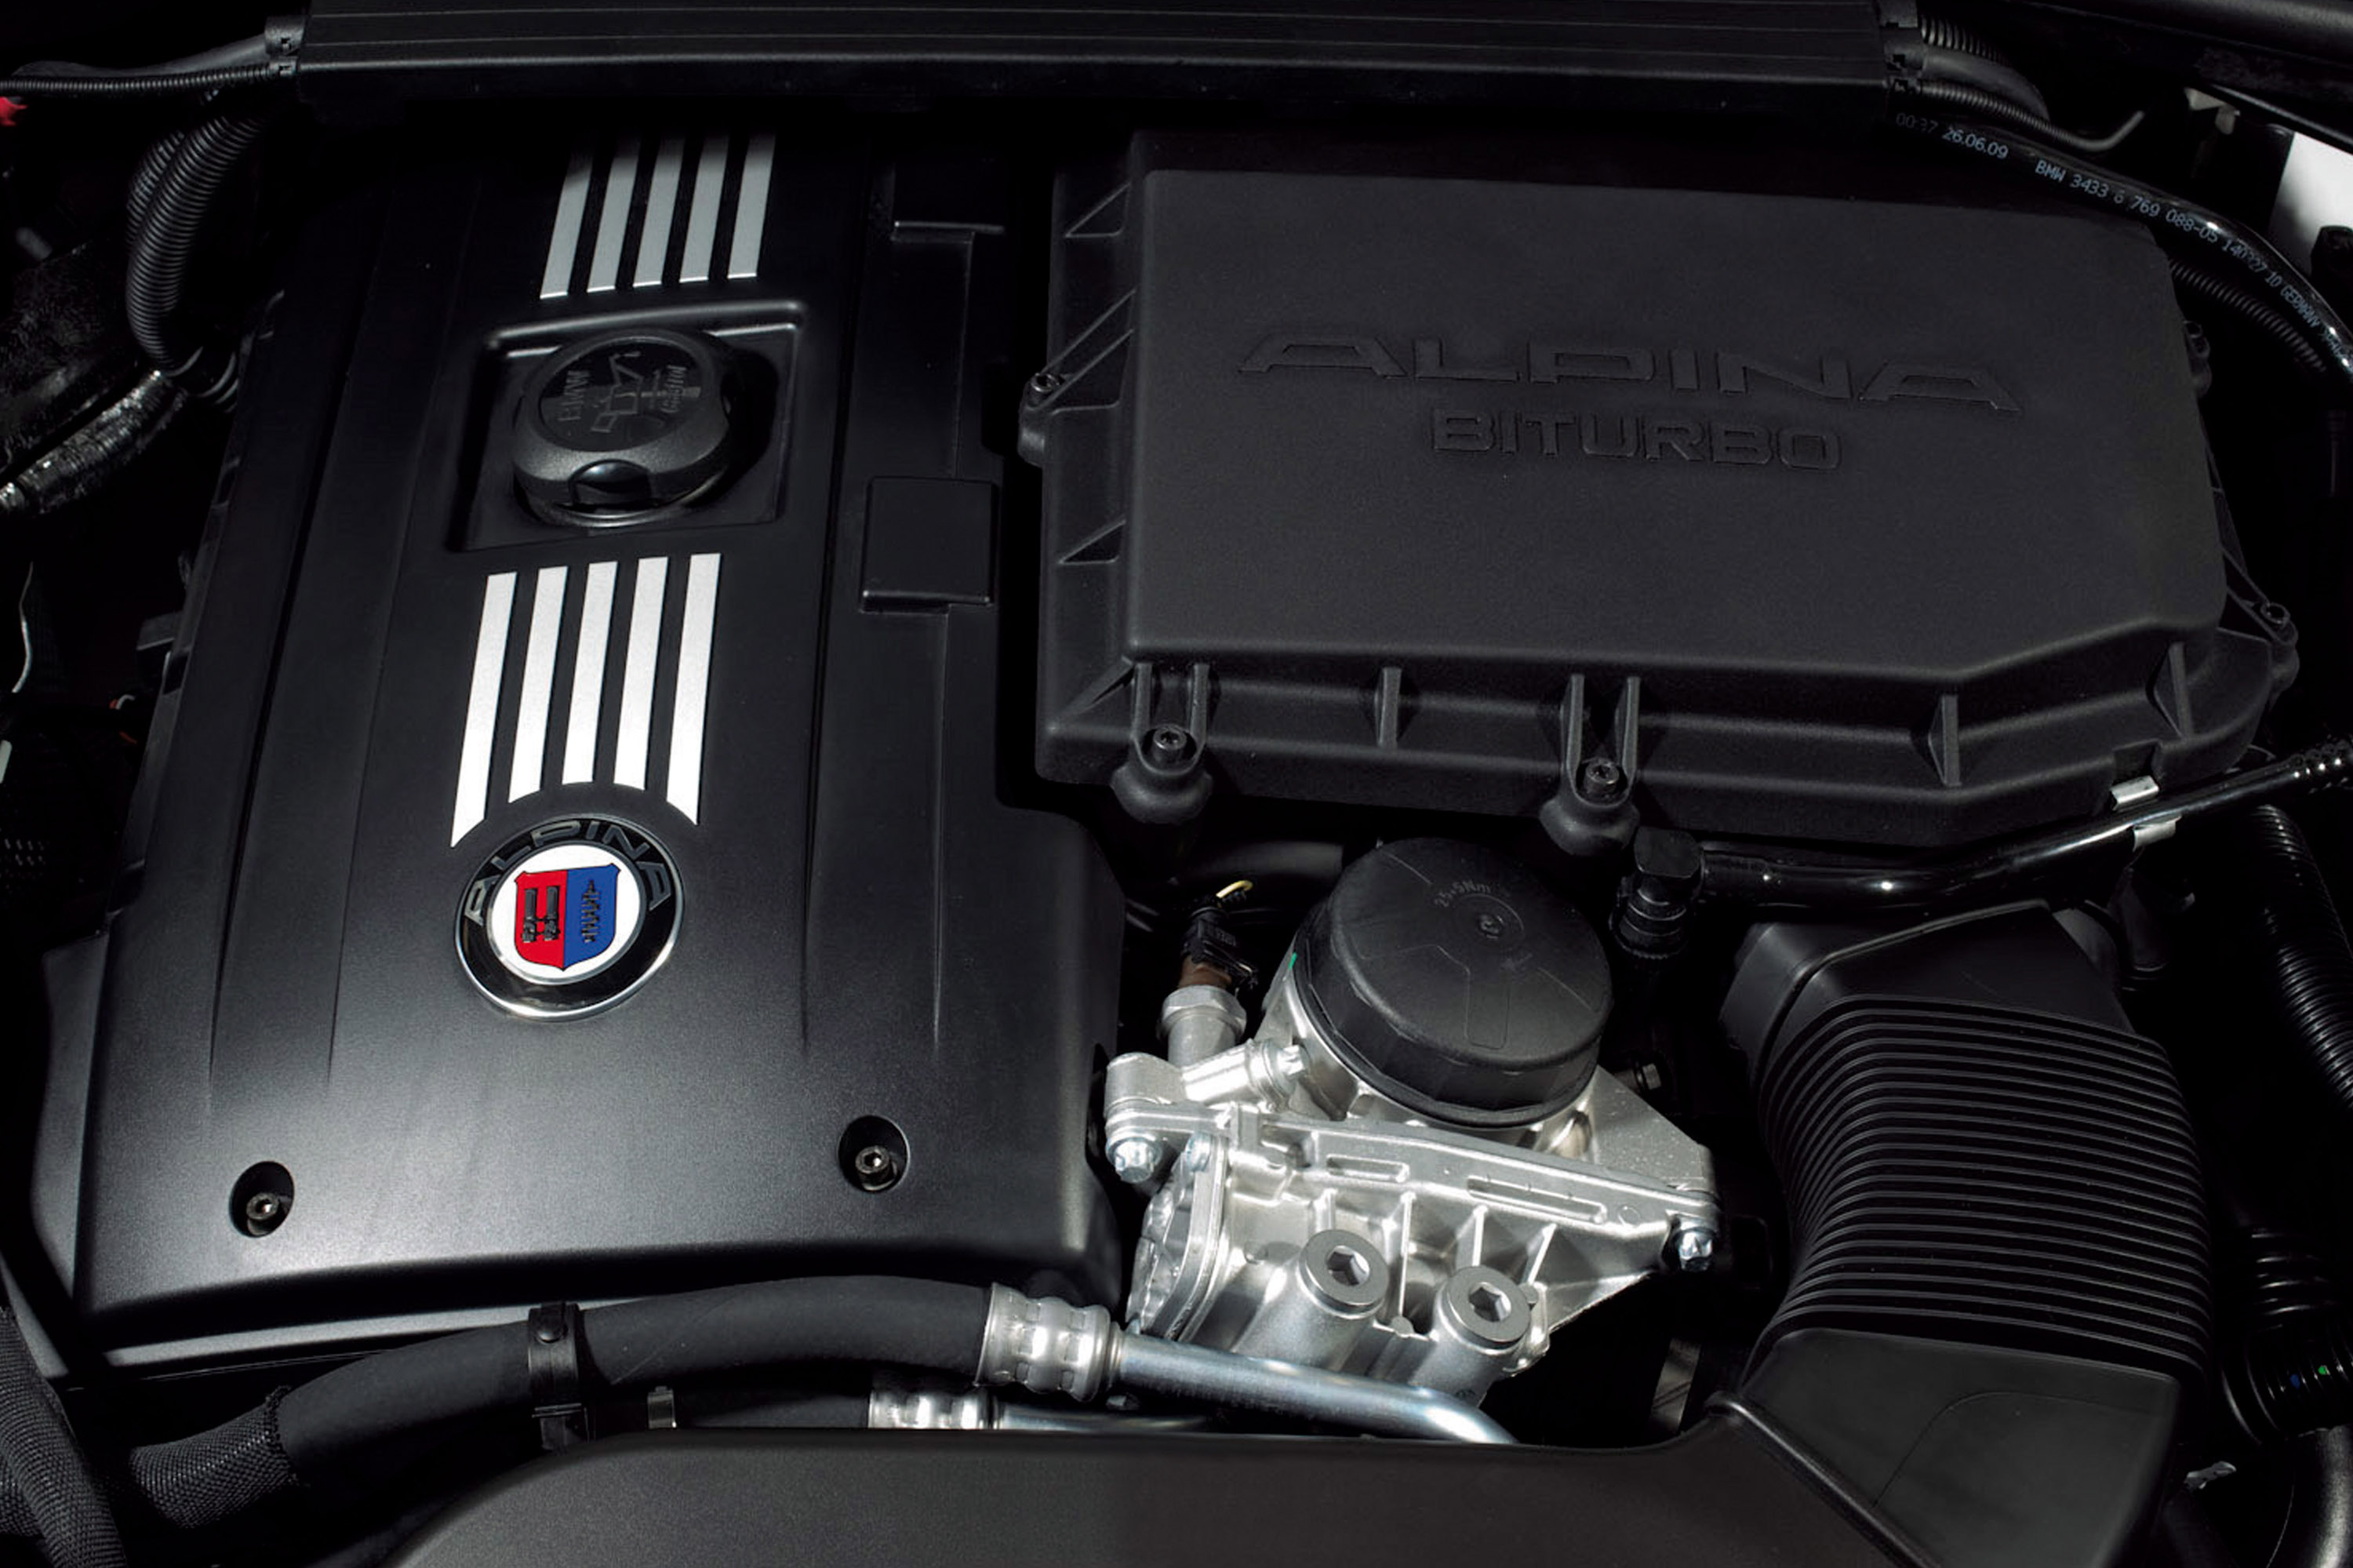 BMW ALPINA B3 S Bi-Turbo